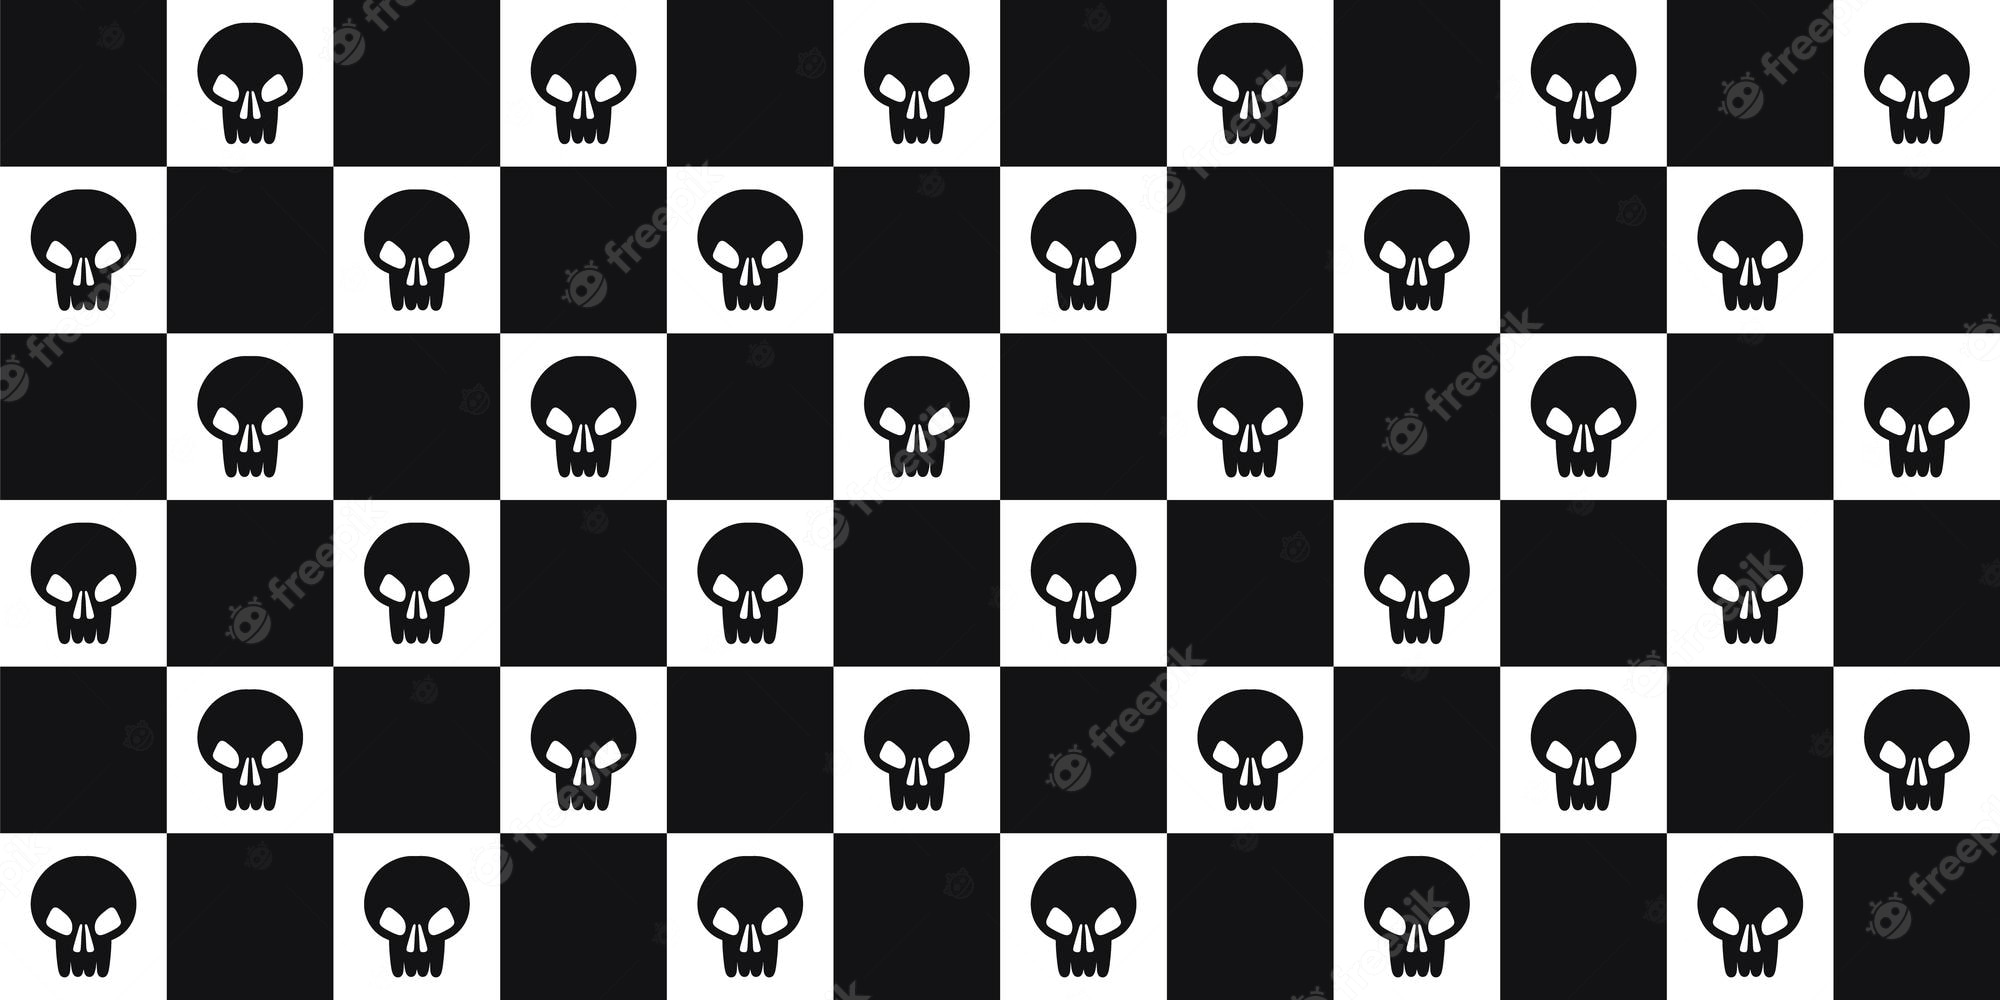 Checkered wallpaper Image. Free Vectors, & PSD